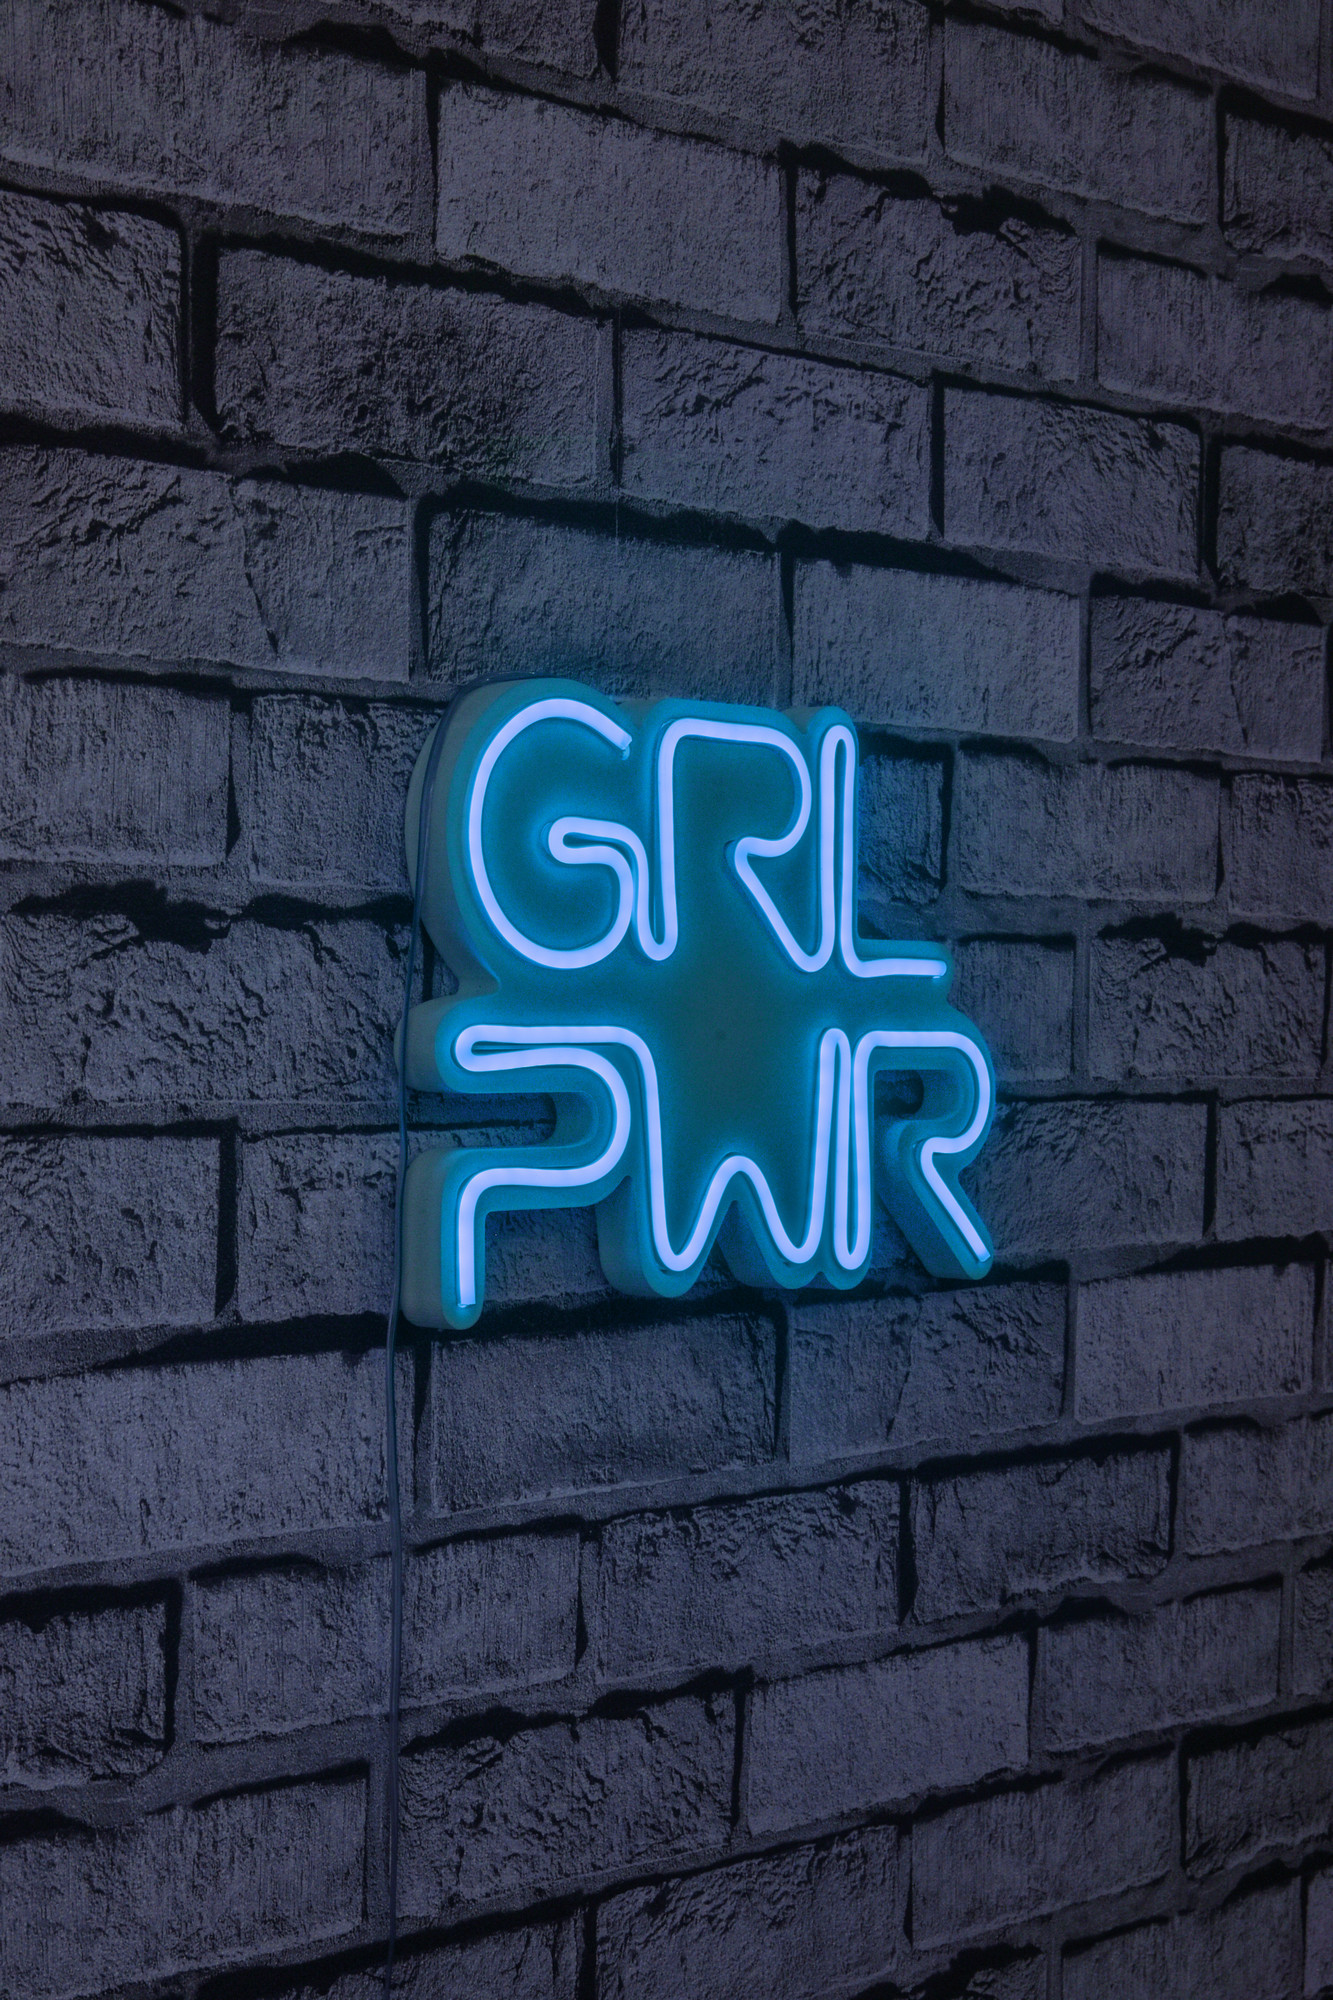 ASIR Nástěnná dekorace s LED osvětlením GIRL POWER modrá